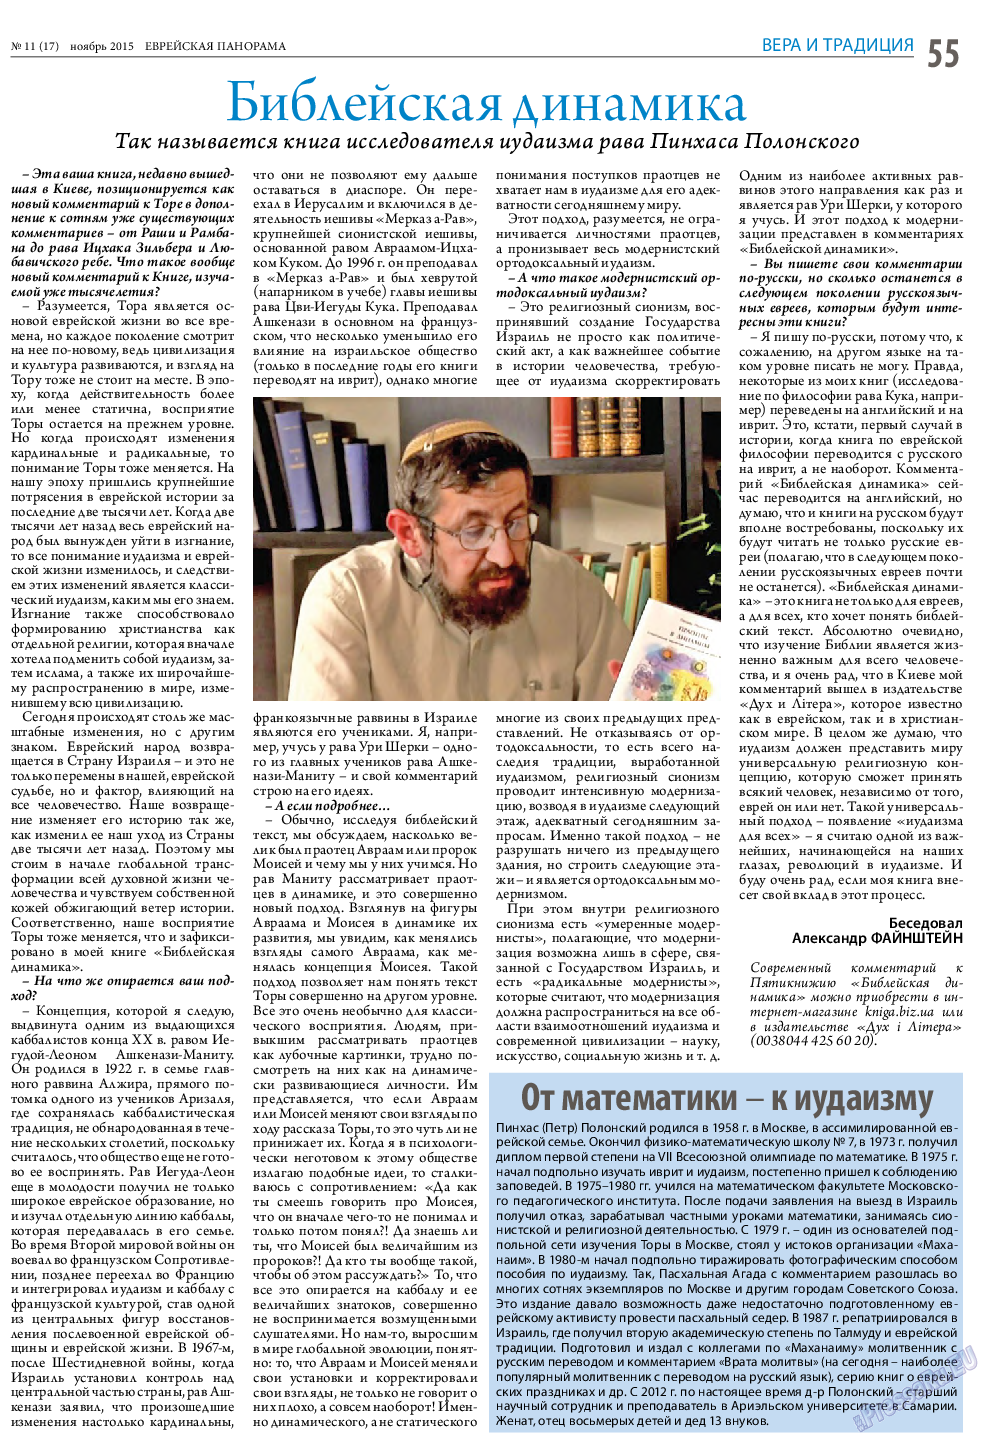 Еврейская панорама, газета. 2015 №11 стр.55